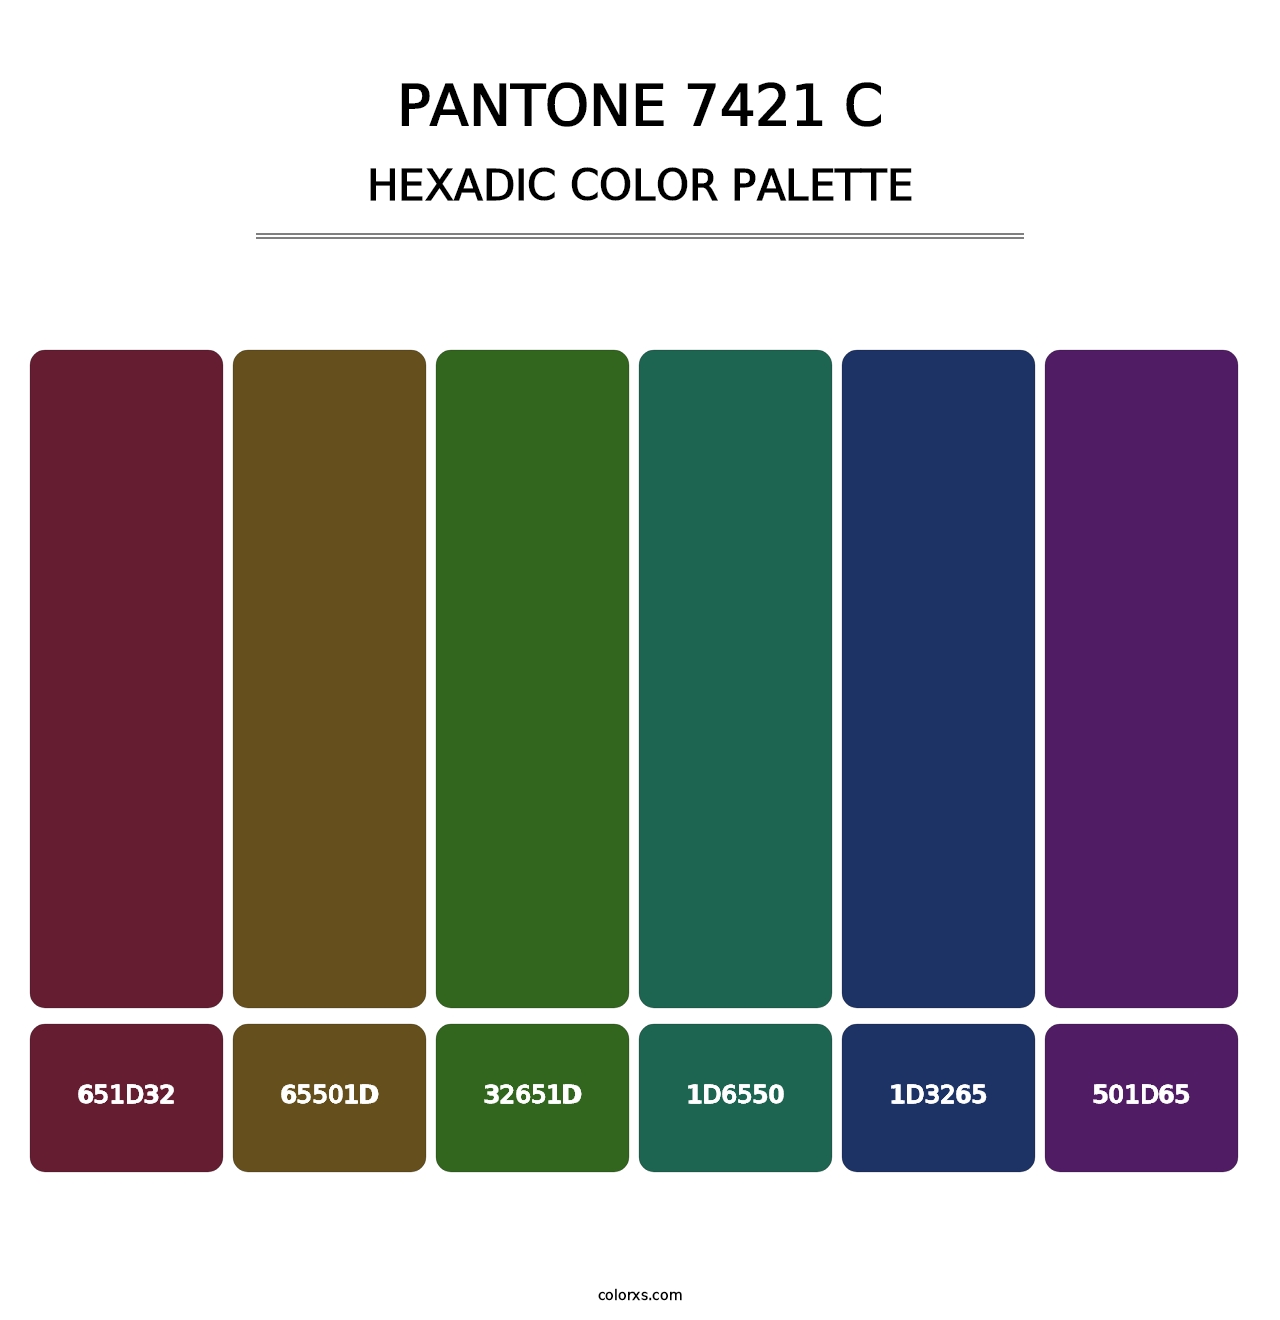 PANTONE 7421 C - Hexadic Color Palette